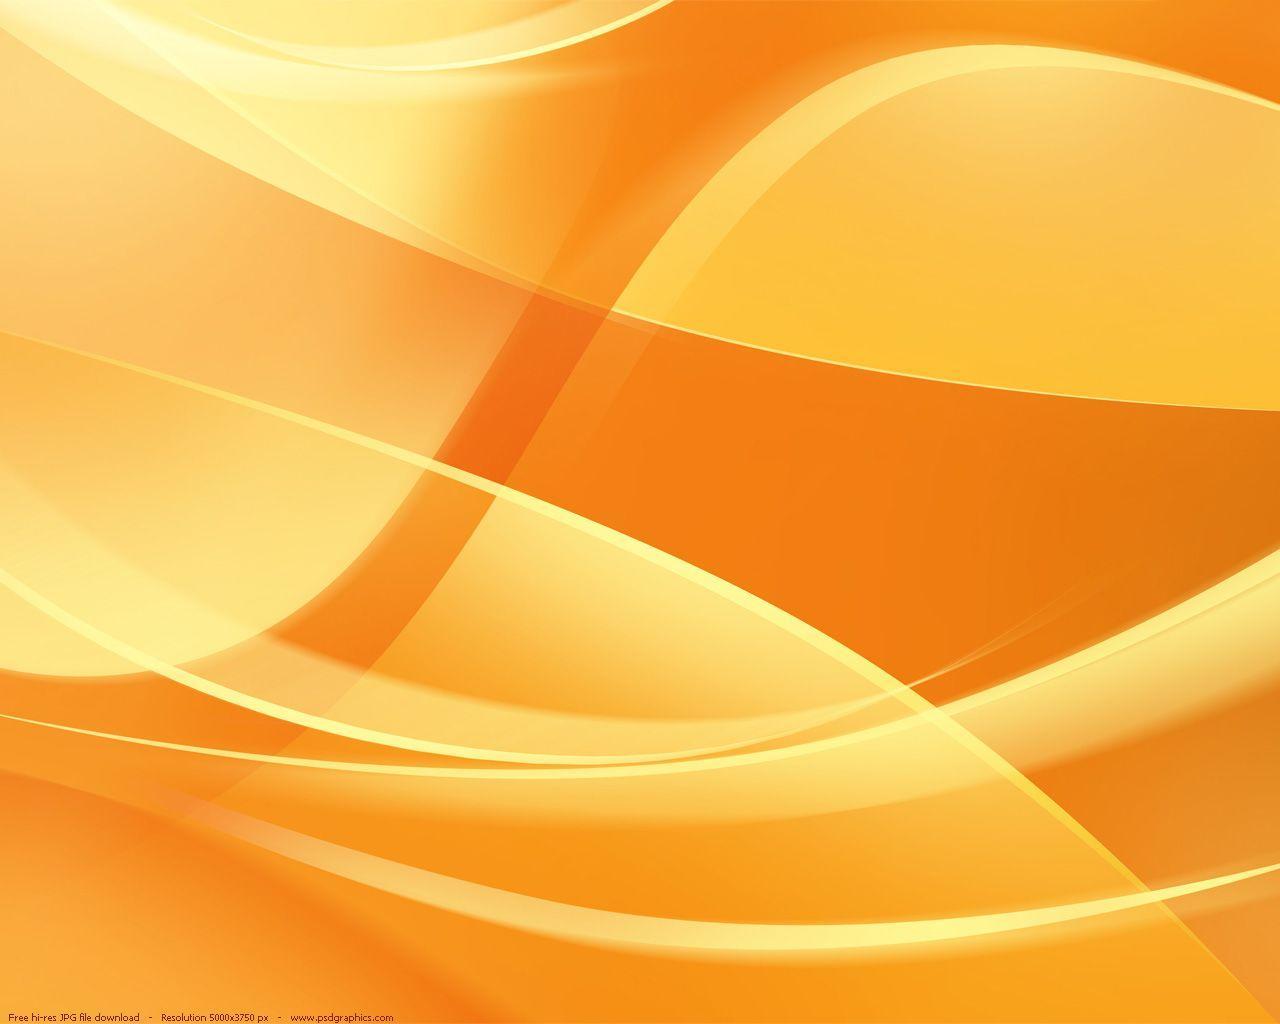 Orange background image (2) Latest High Quality Wallpaper